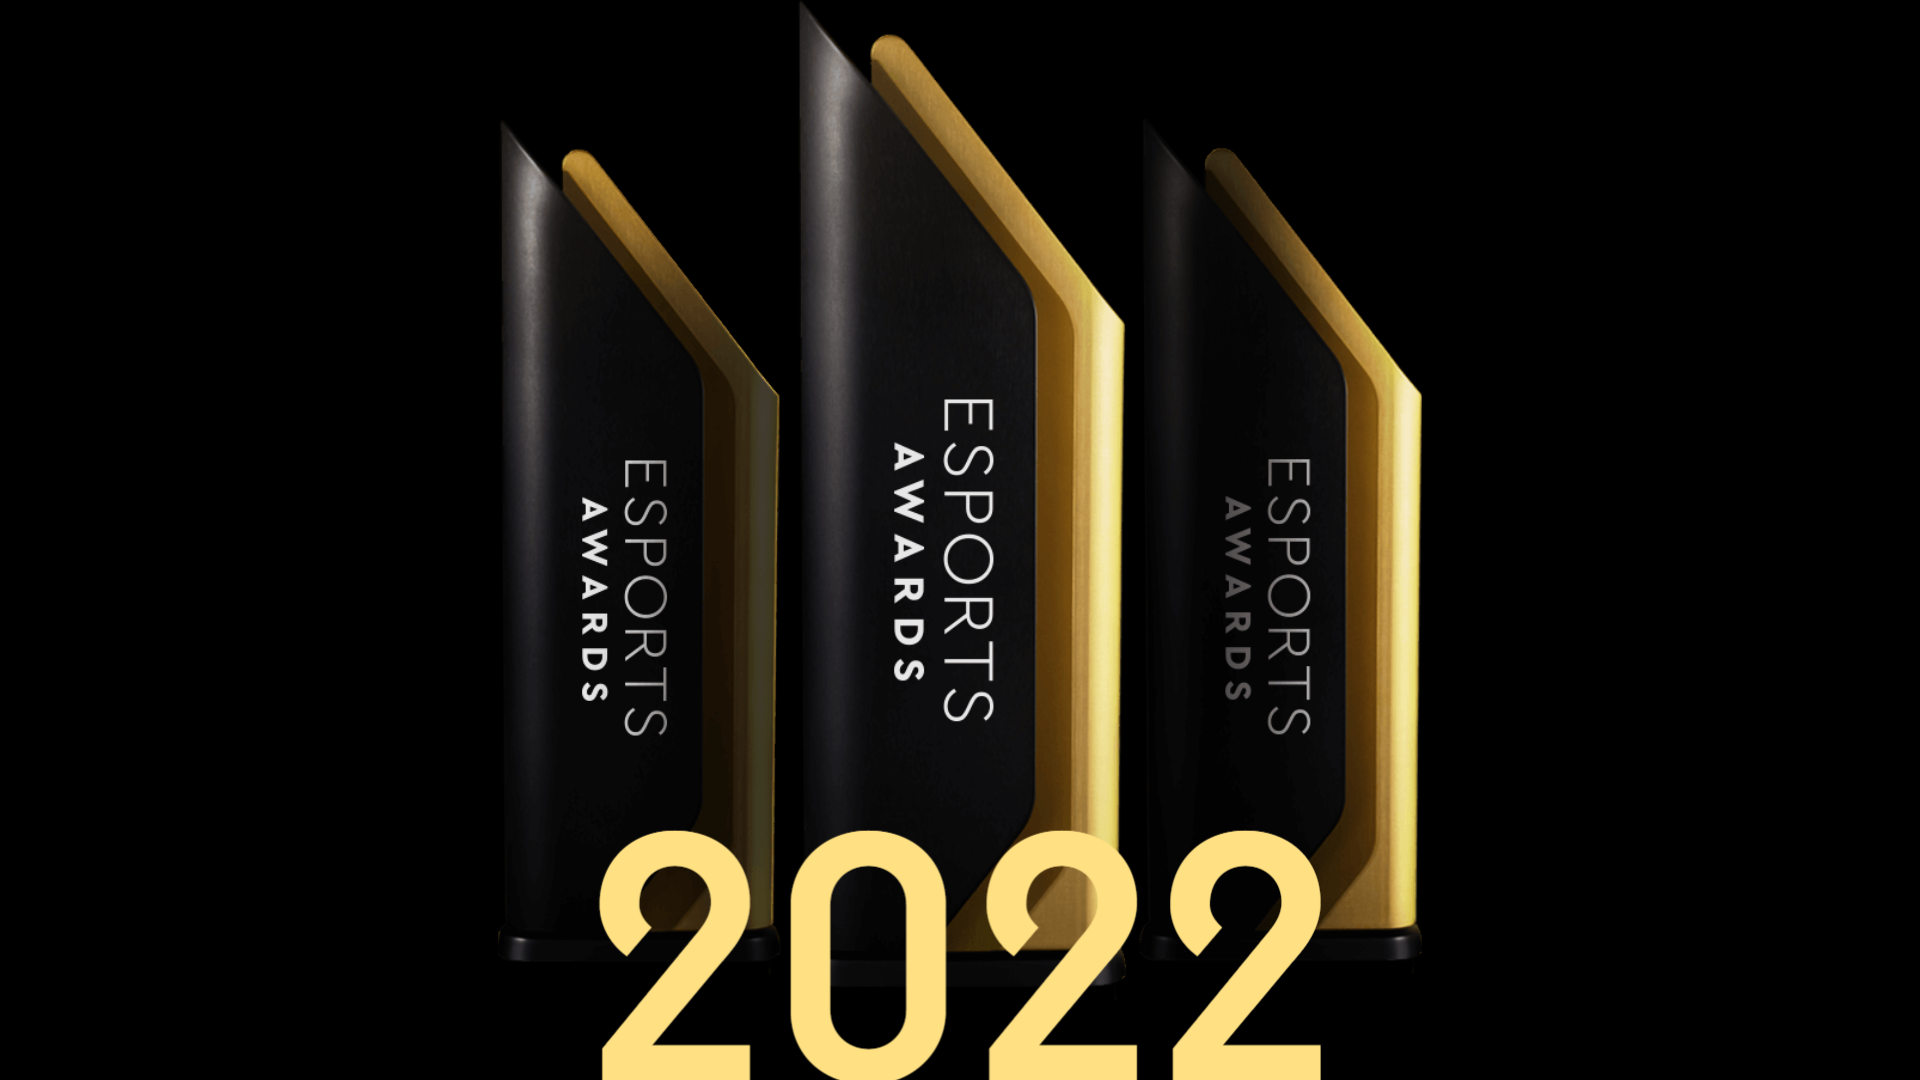 Esports Awards 2022